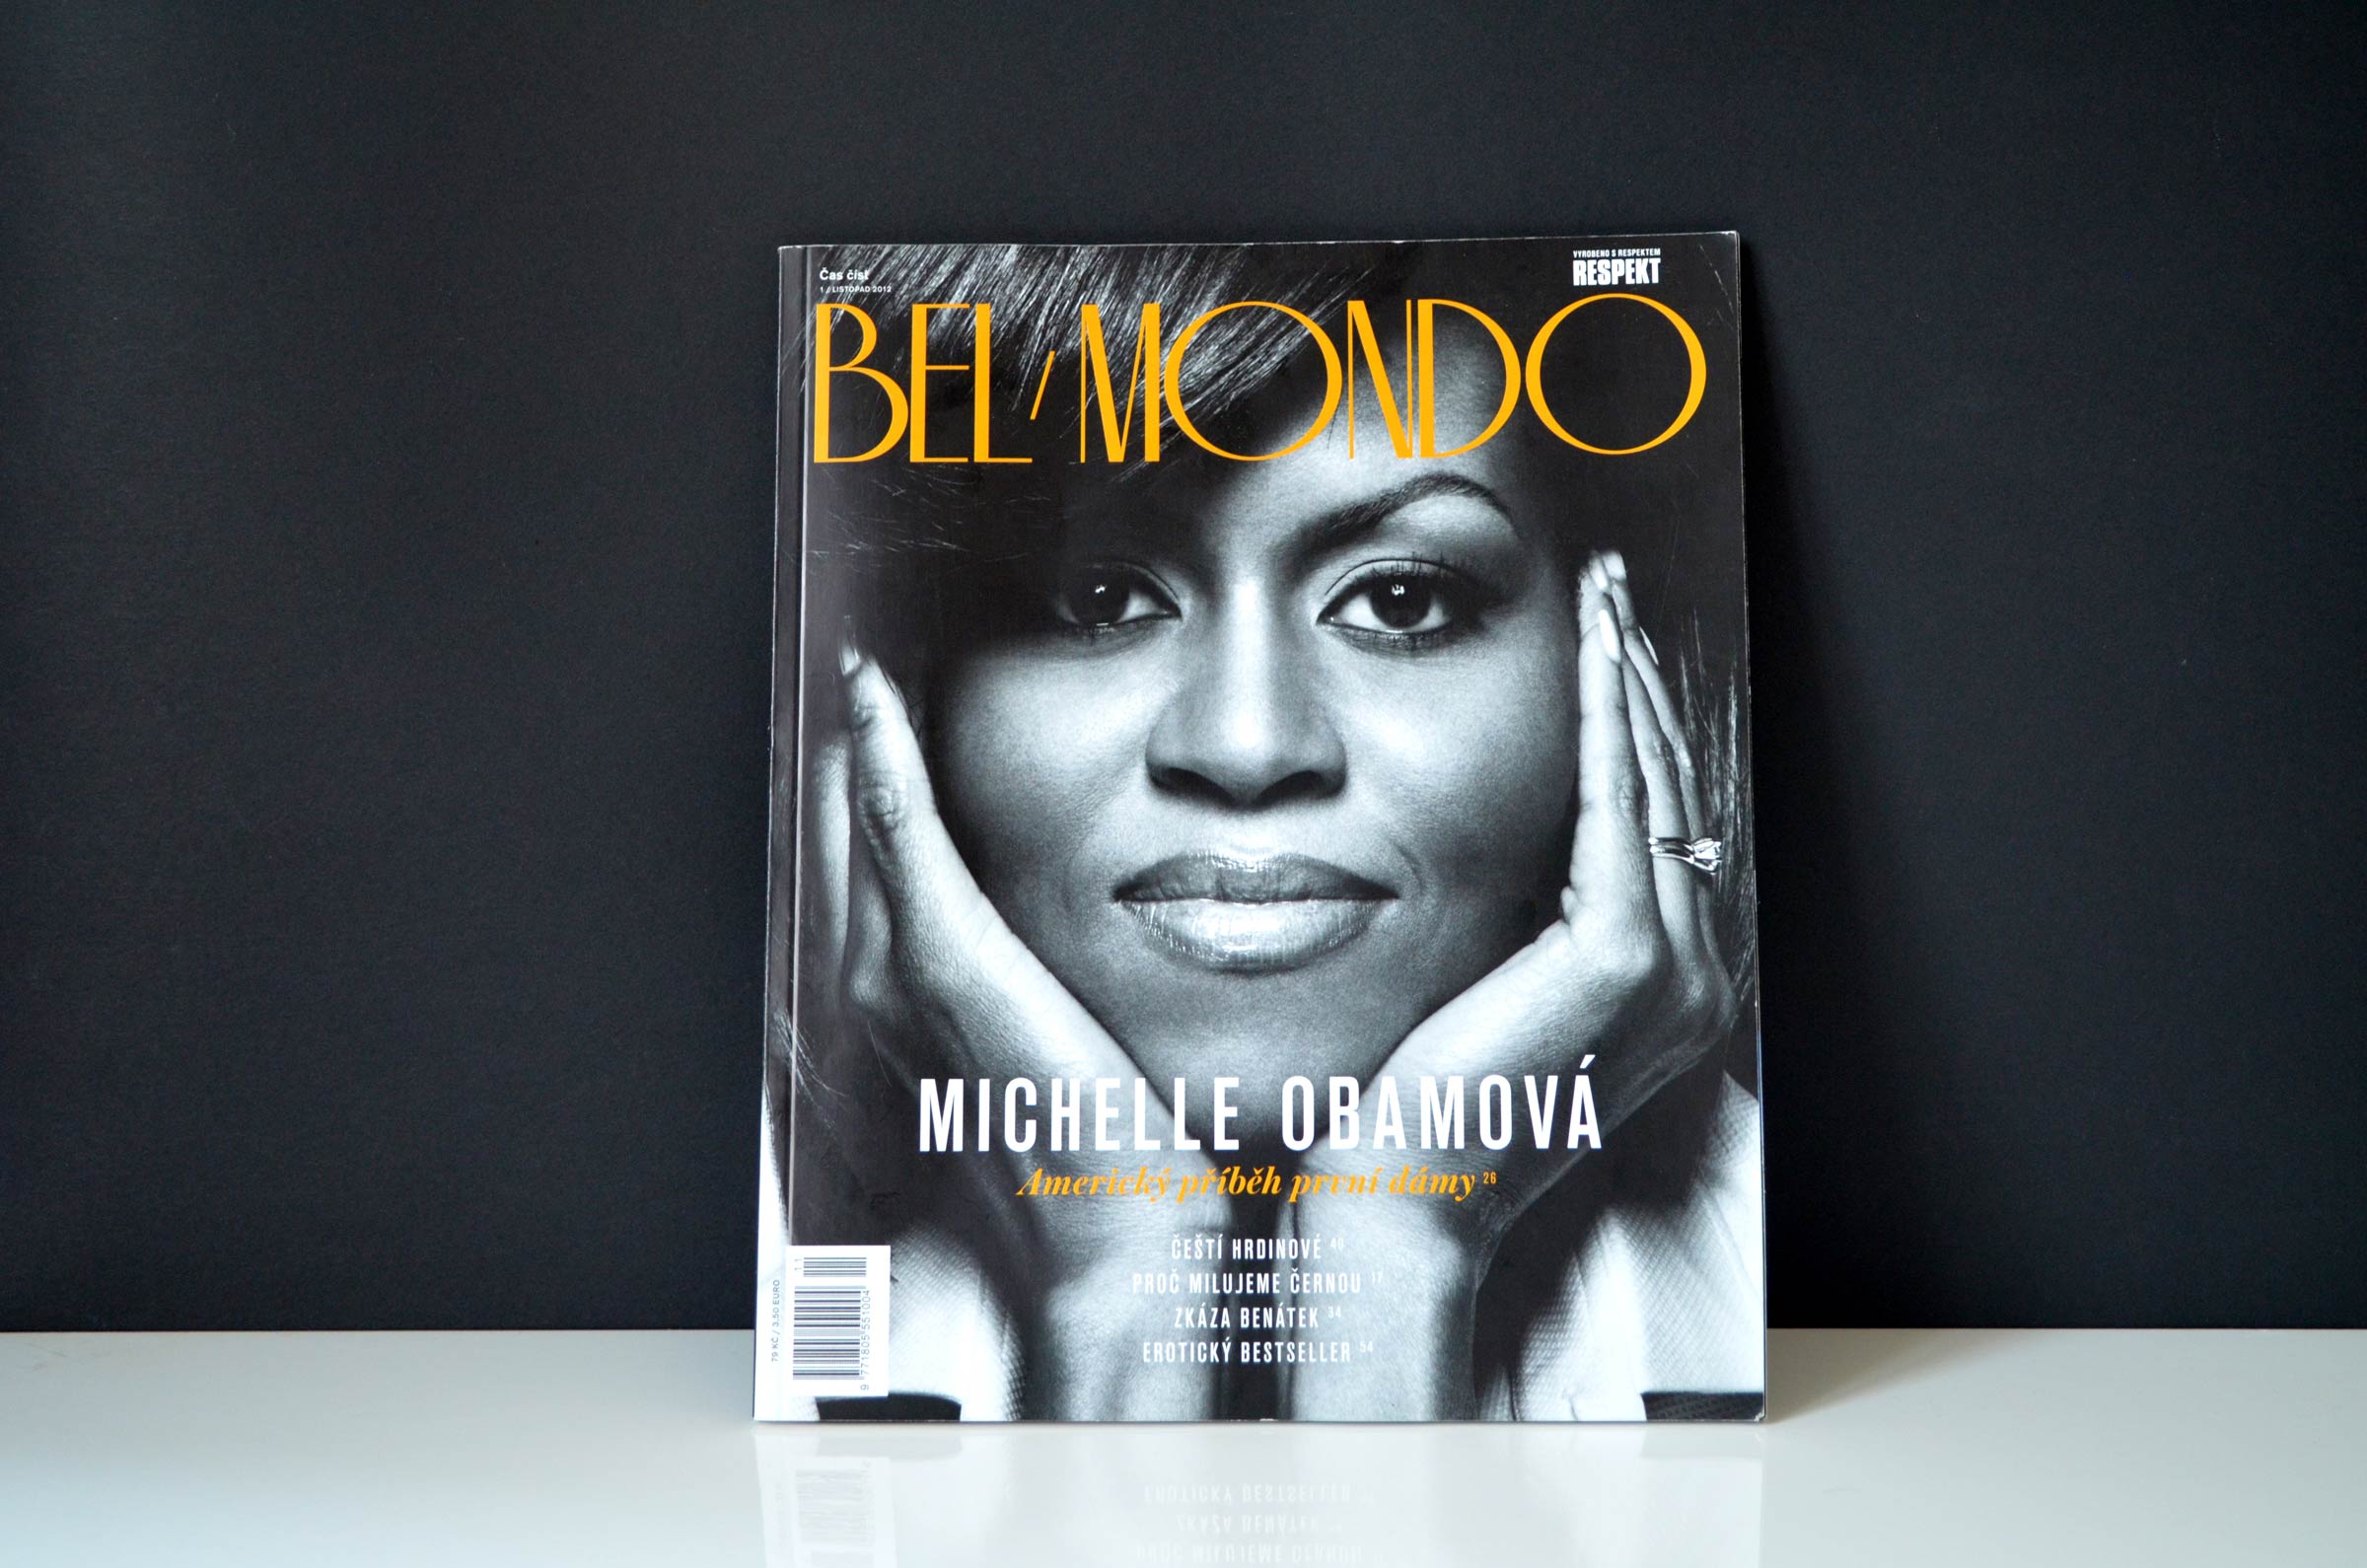 Michell Obama on the cover of Bel Mondo magazine.